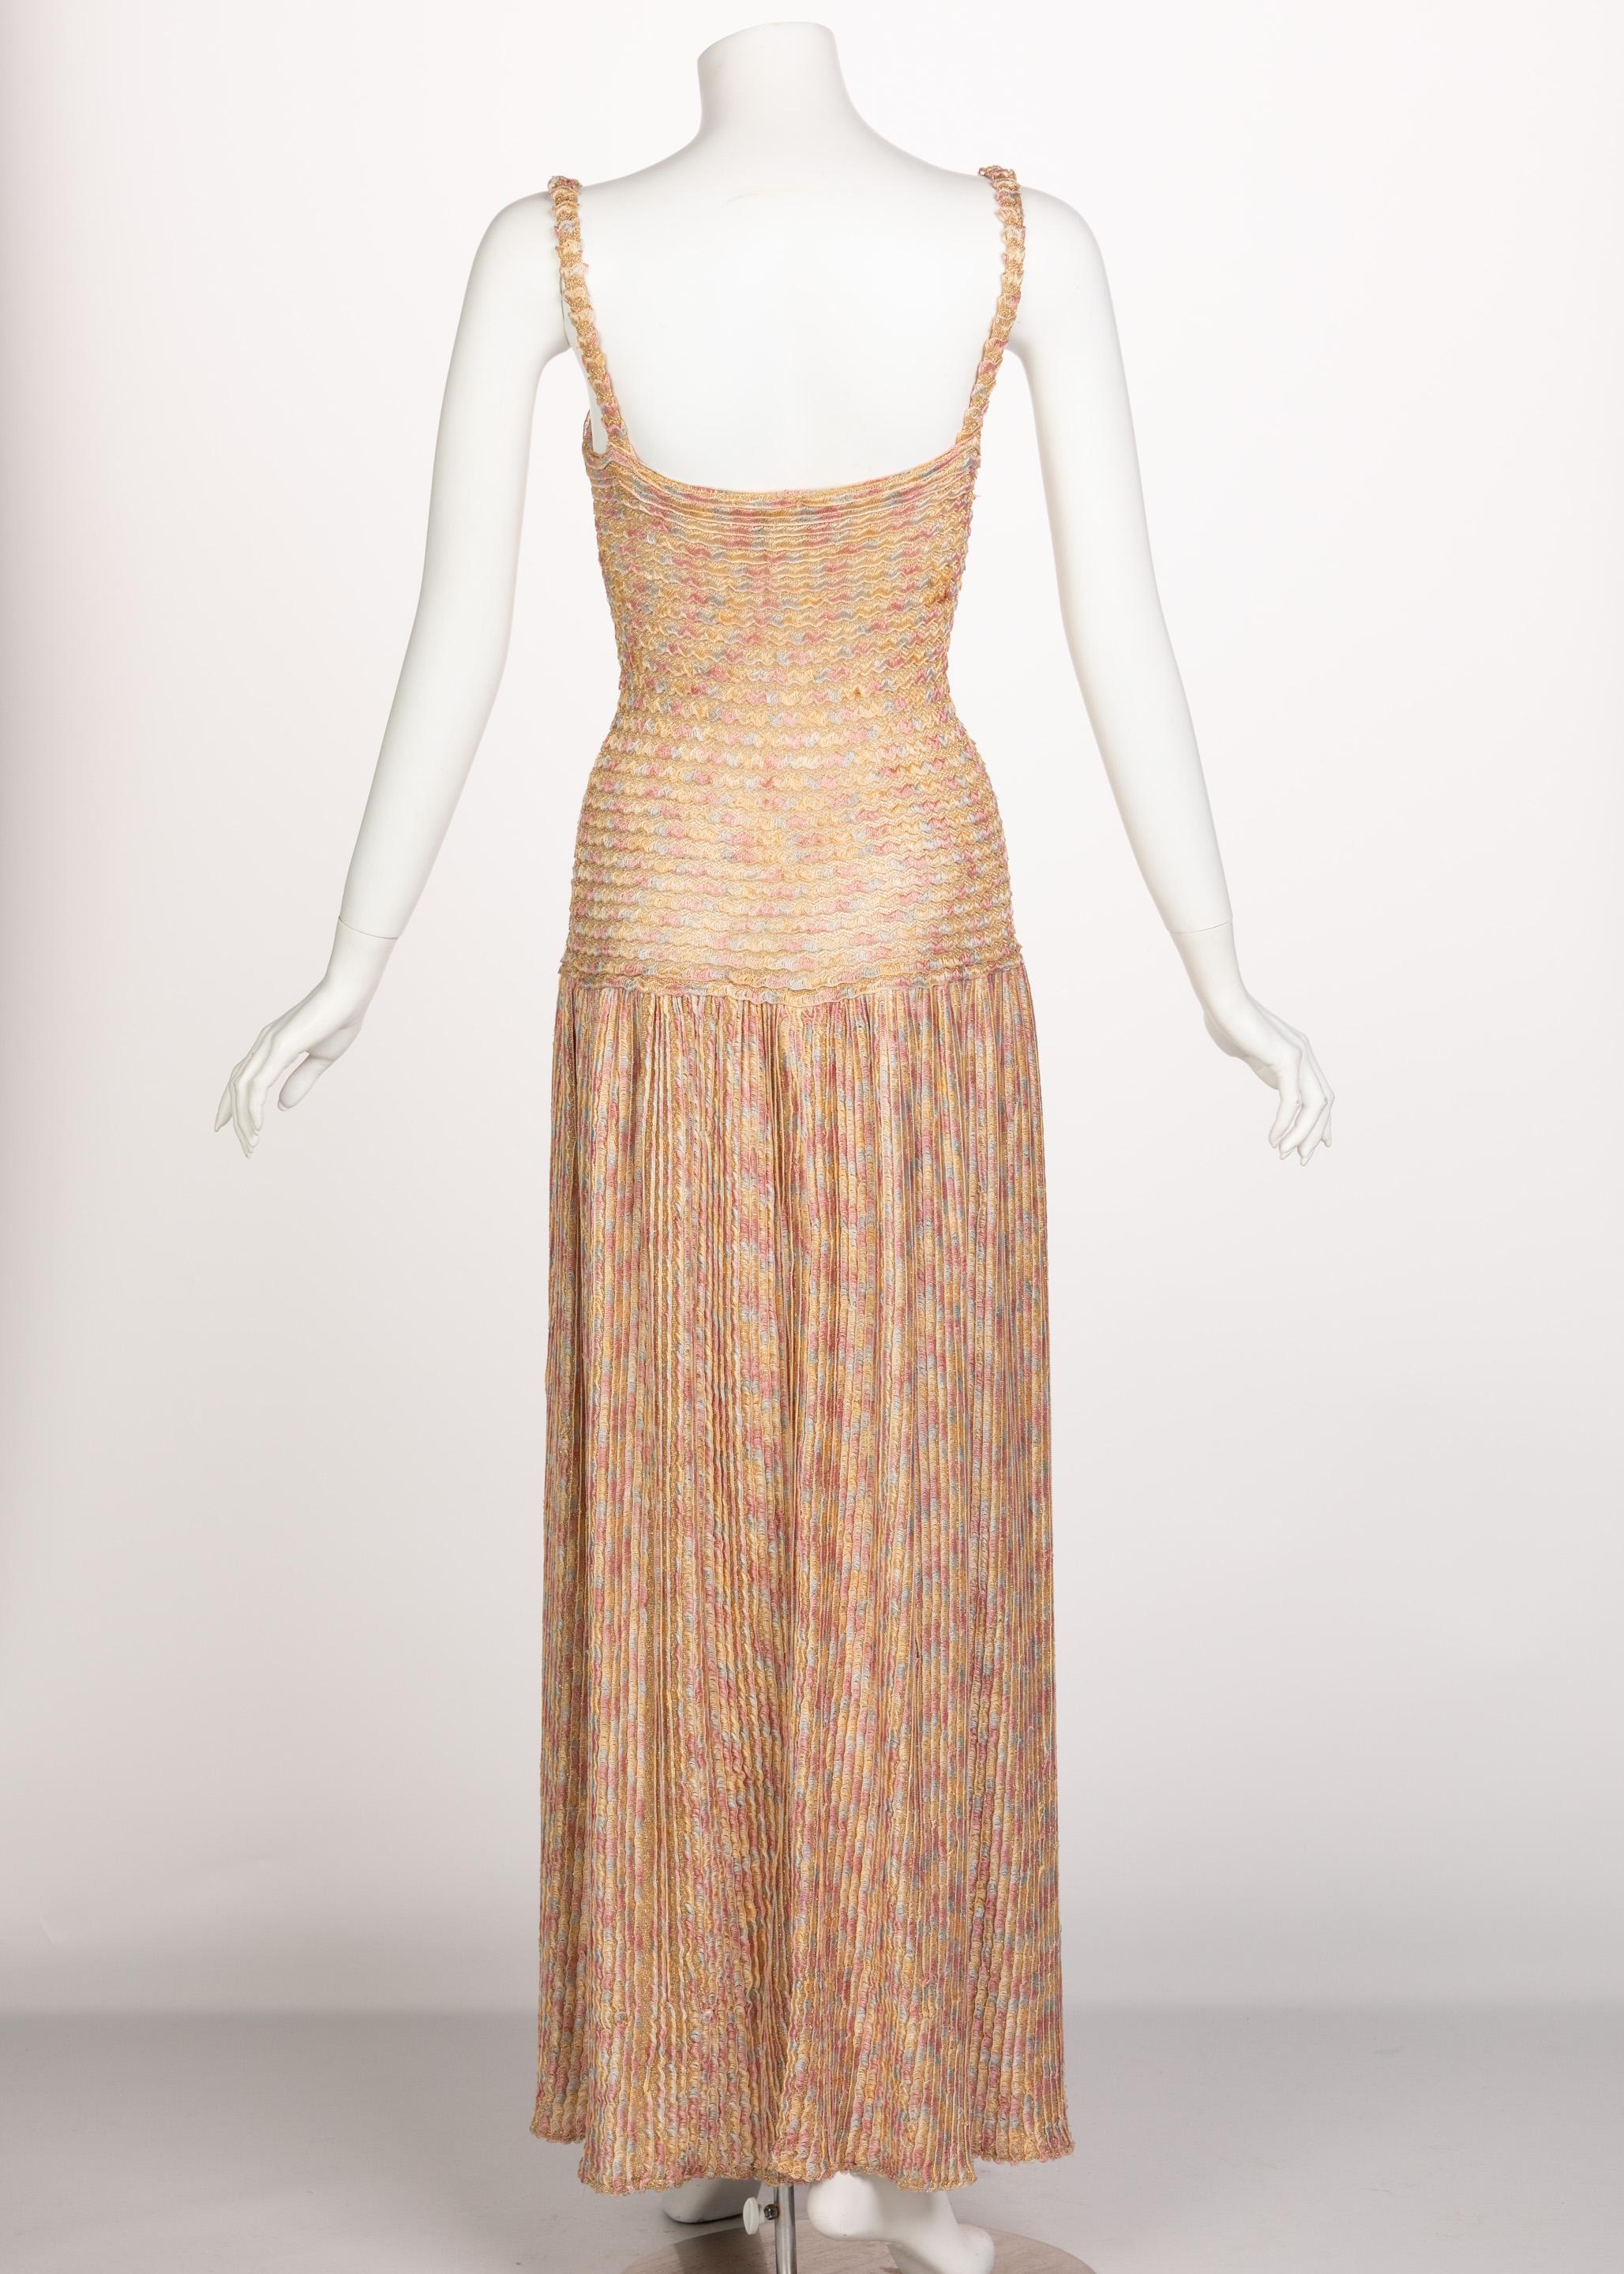 Missoni Pink Gold Knit Maxi Dress Cardigan Necklace Beret Set, 1970s For Sale 5